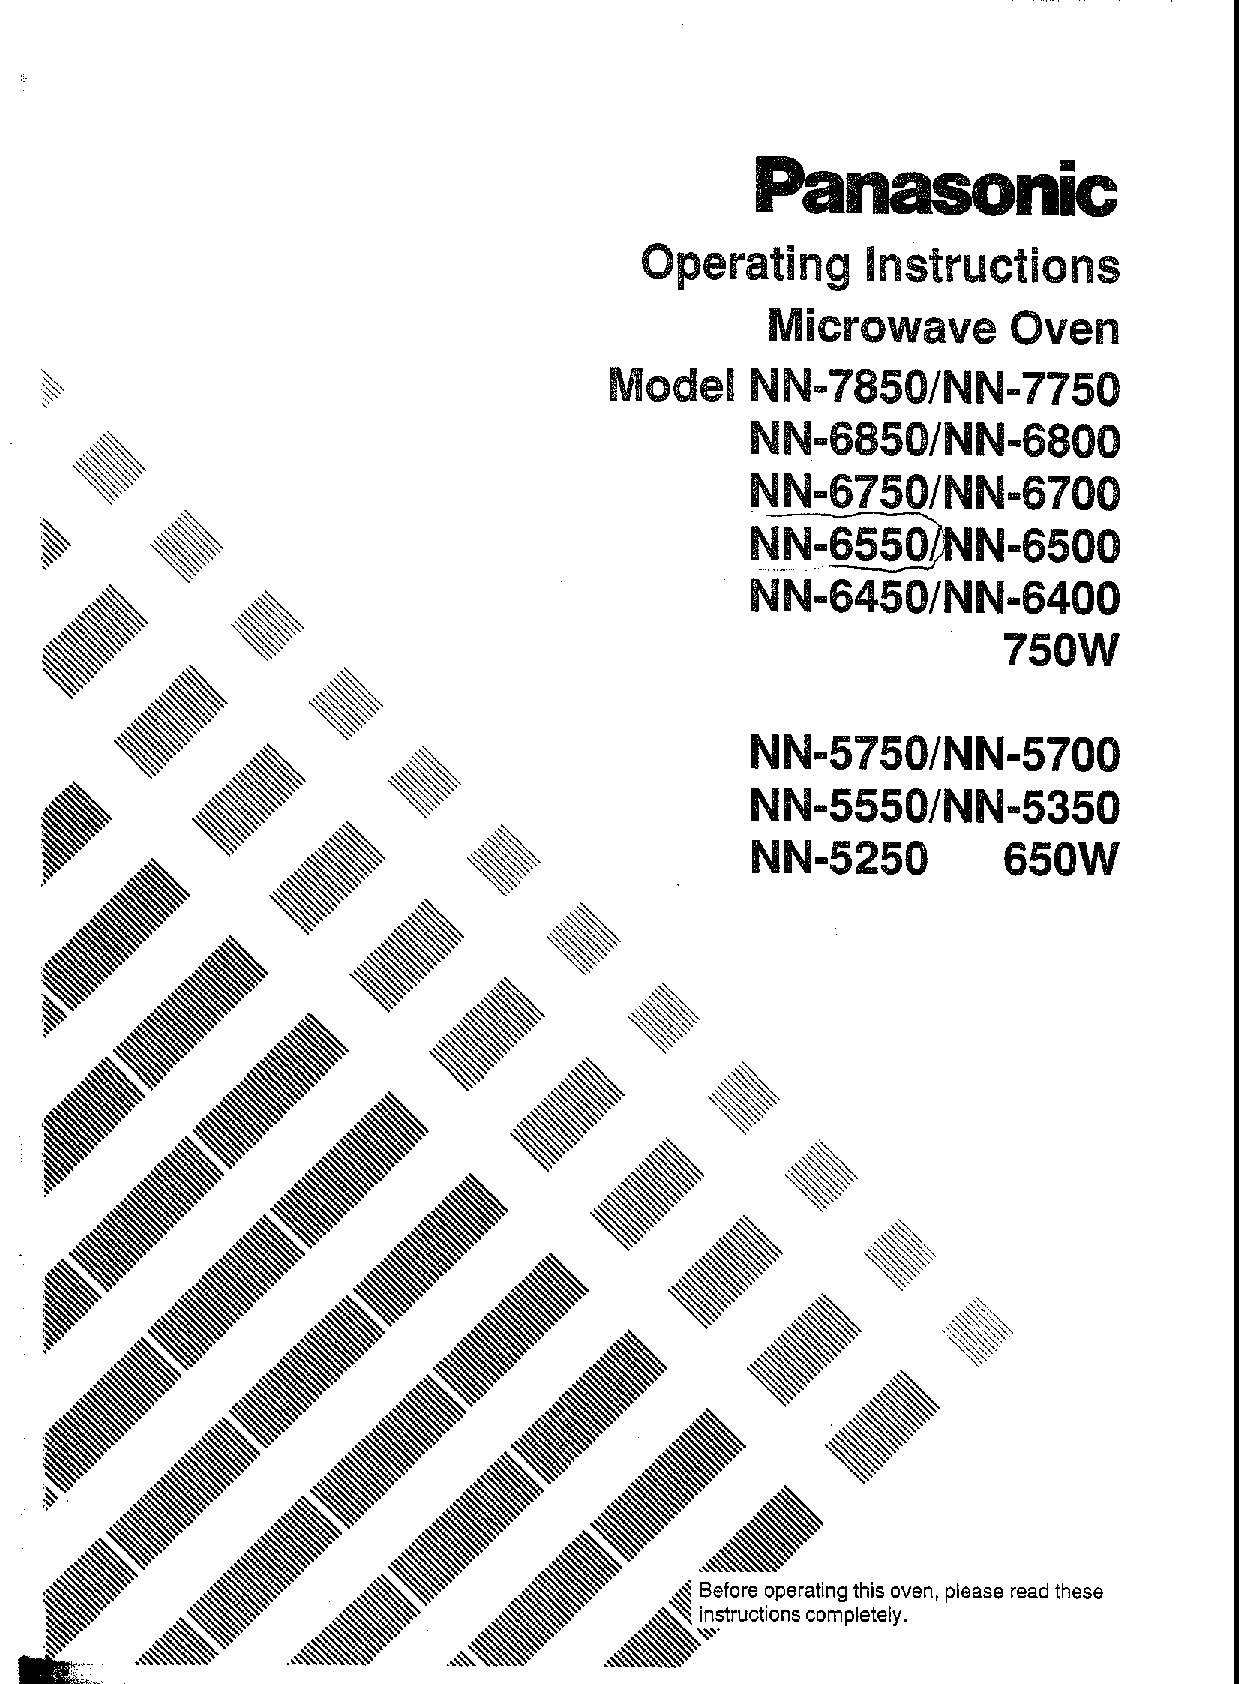 Panasonic 750w, 650w, nn 7850, nn7750, nn5750 User Manual